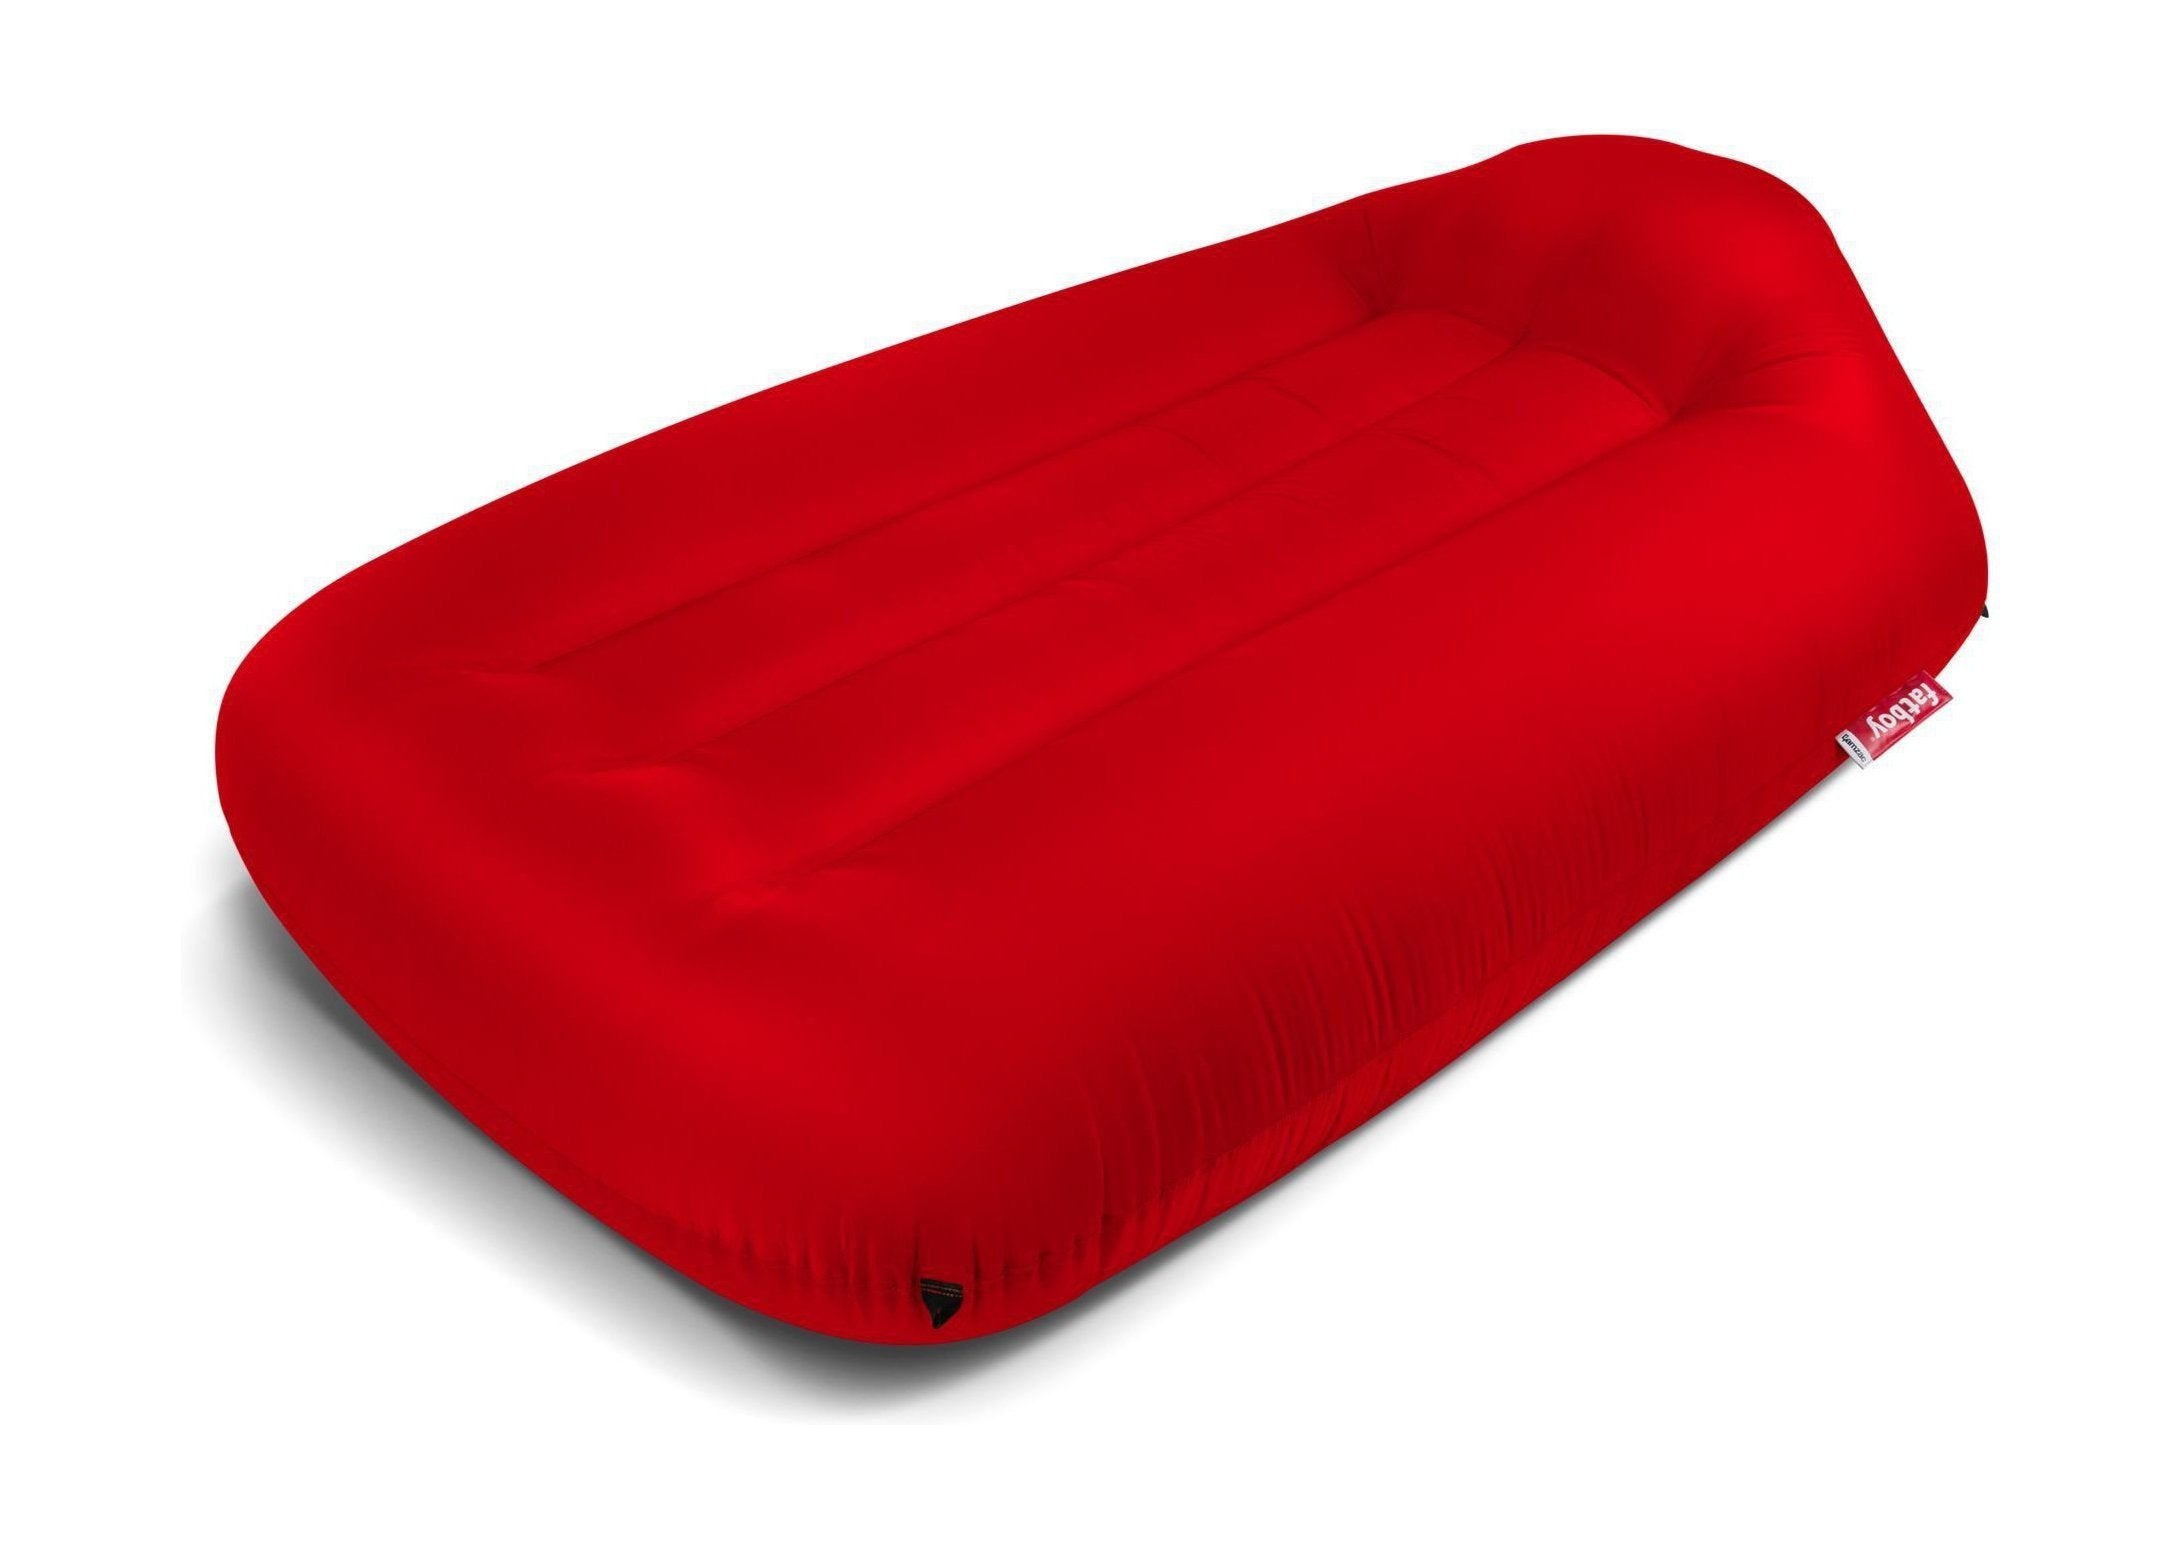 Fatboy Lamzac L Inflatable Air Sofa 3.0, Red